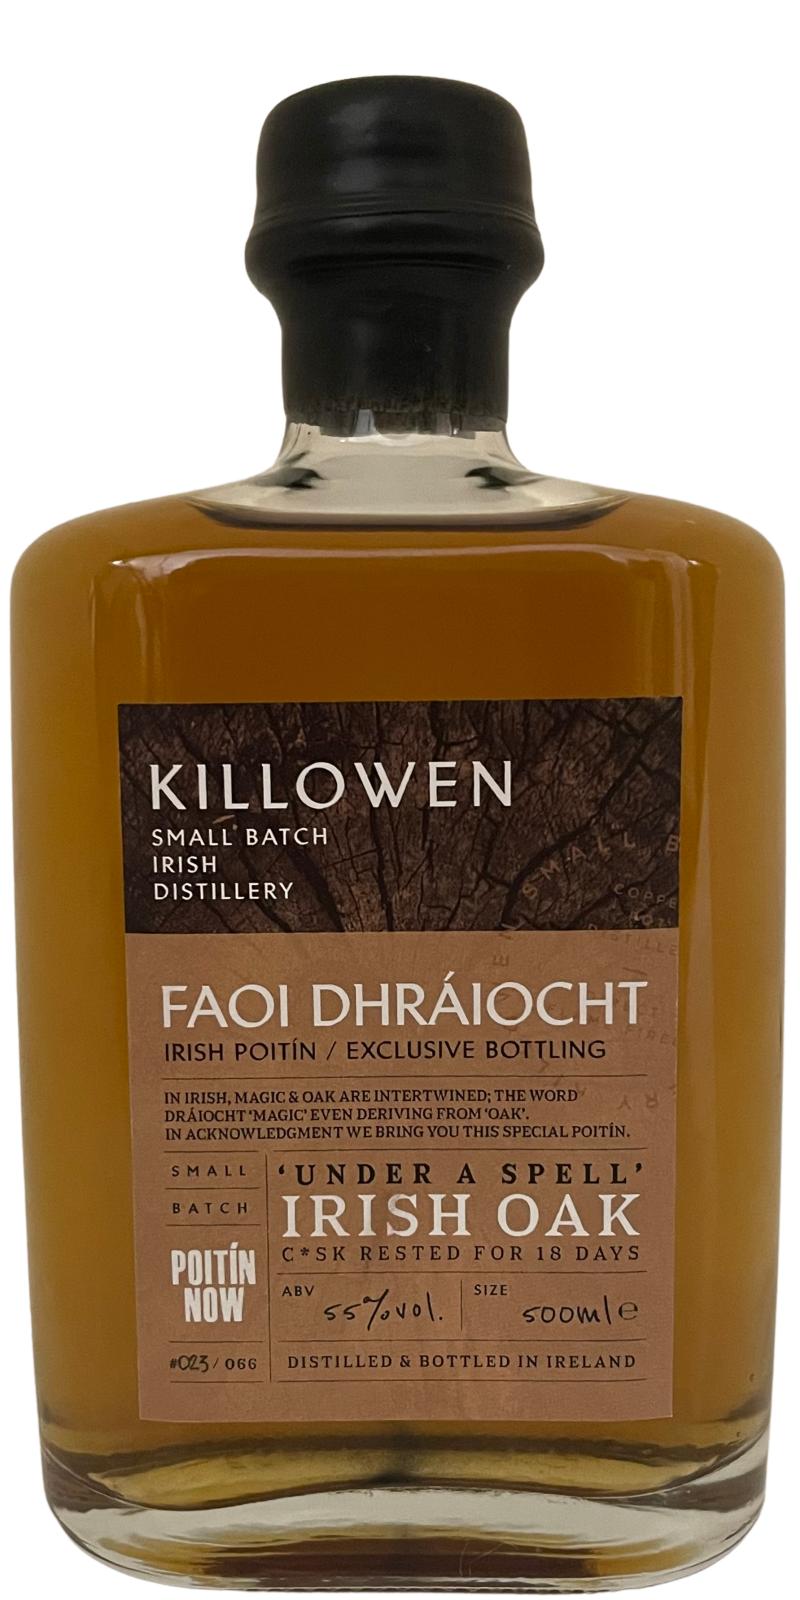 Killowen Faoi Dhraiocht Irish Oak Poitin Now Dublin 55% 700ml